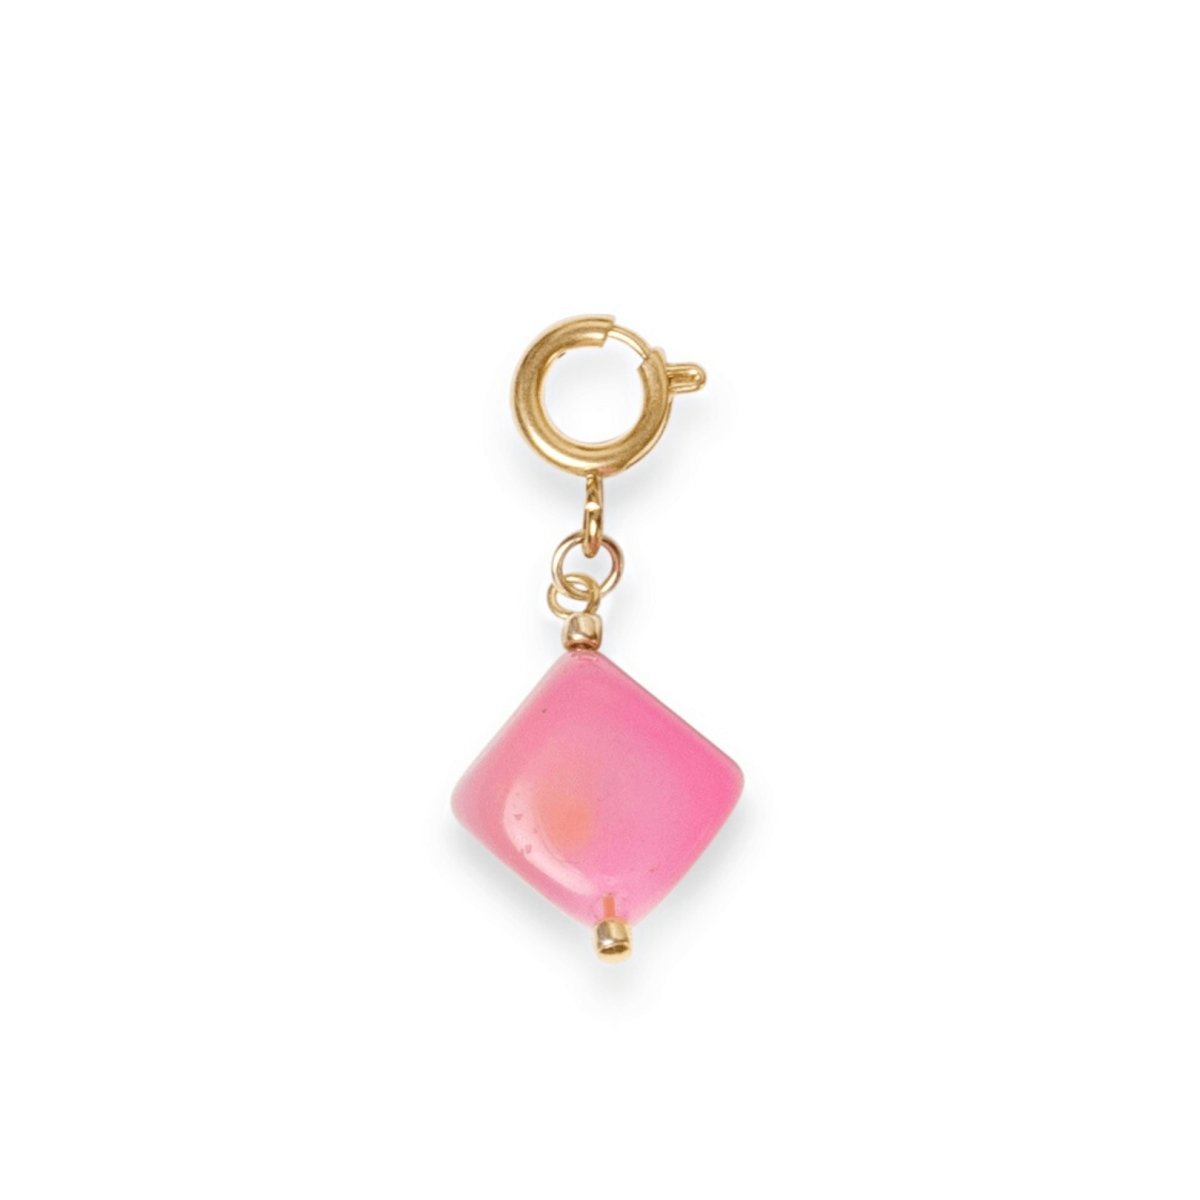 Trendjuwelier Bemelmans - Le Veer Jewelry Pink Cube Charm Goud